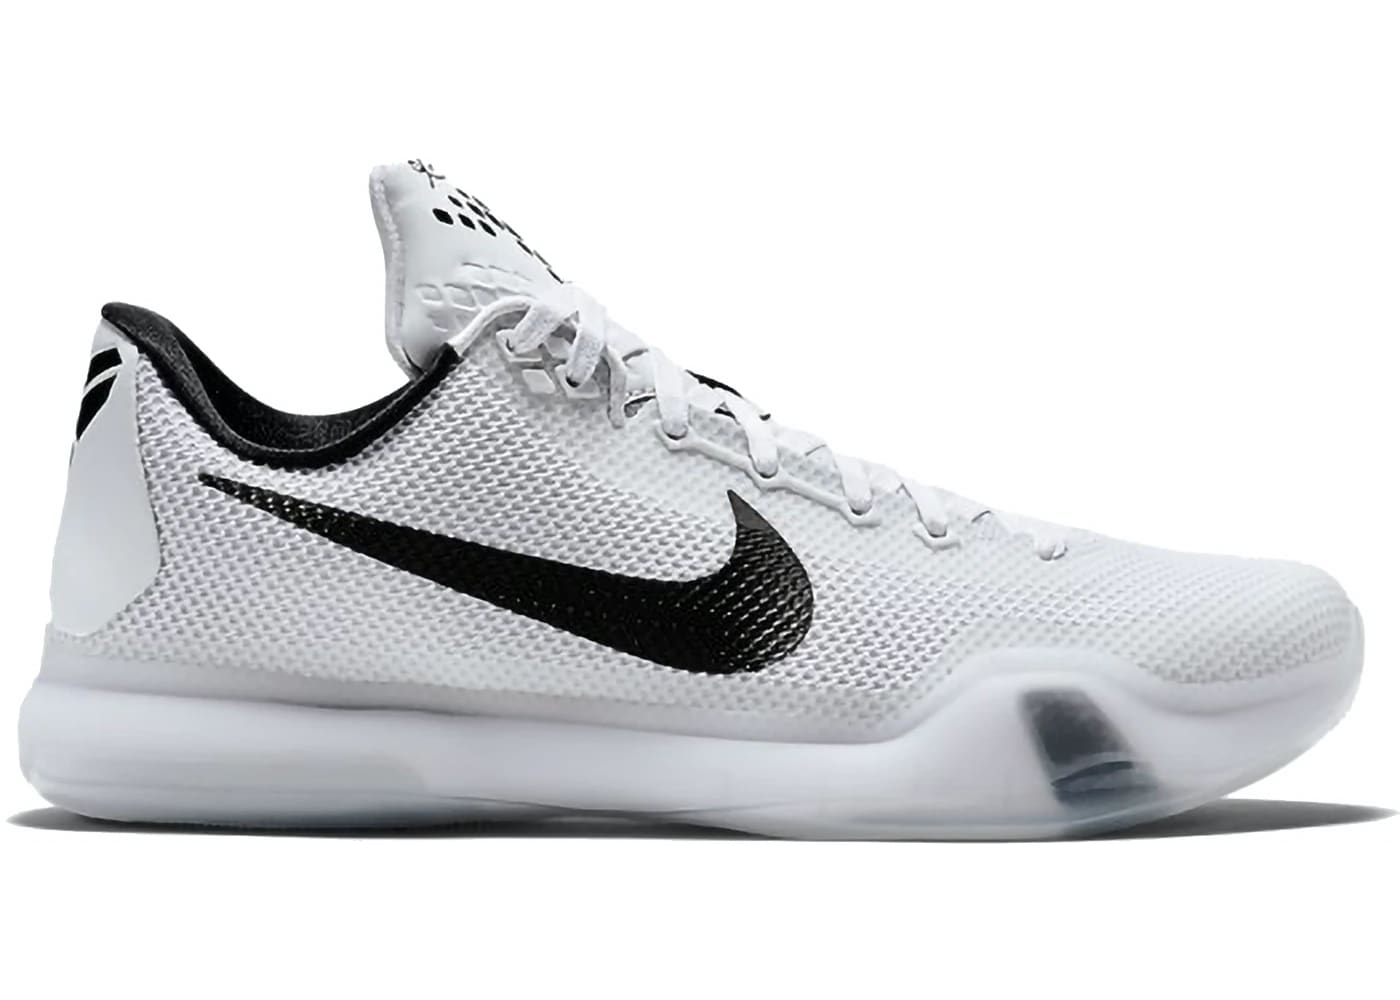 Nike Kobe 10 TB White Black